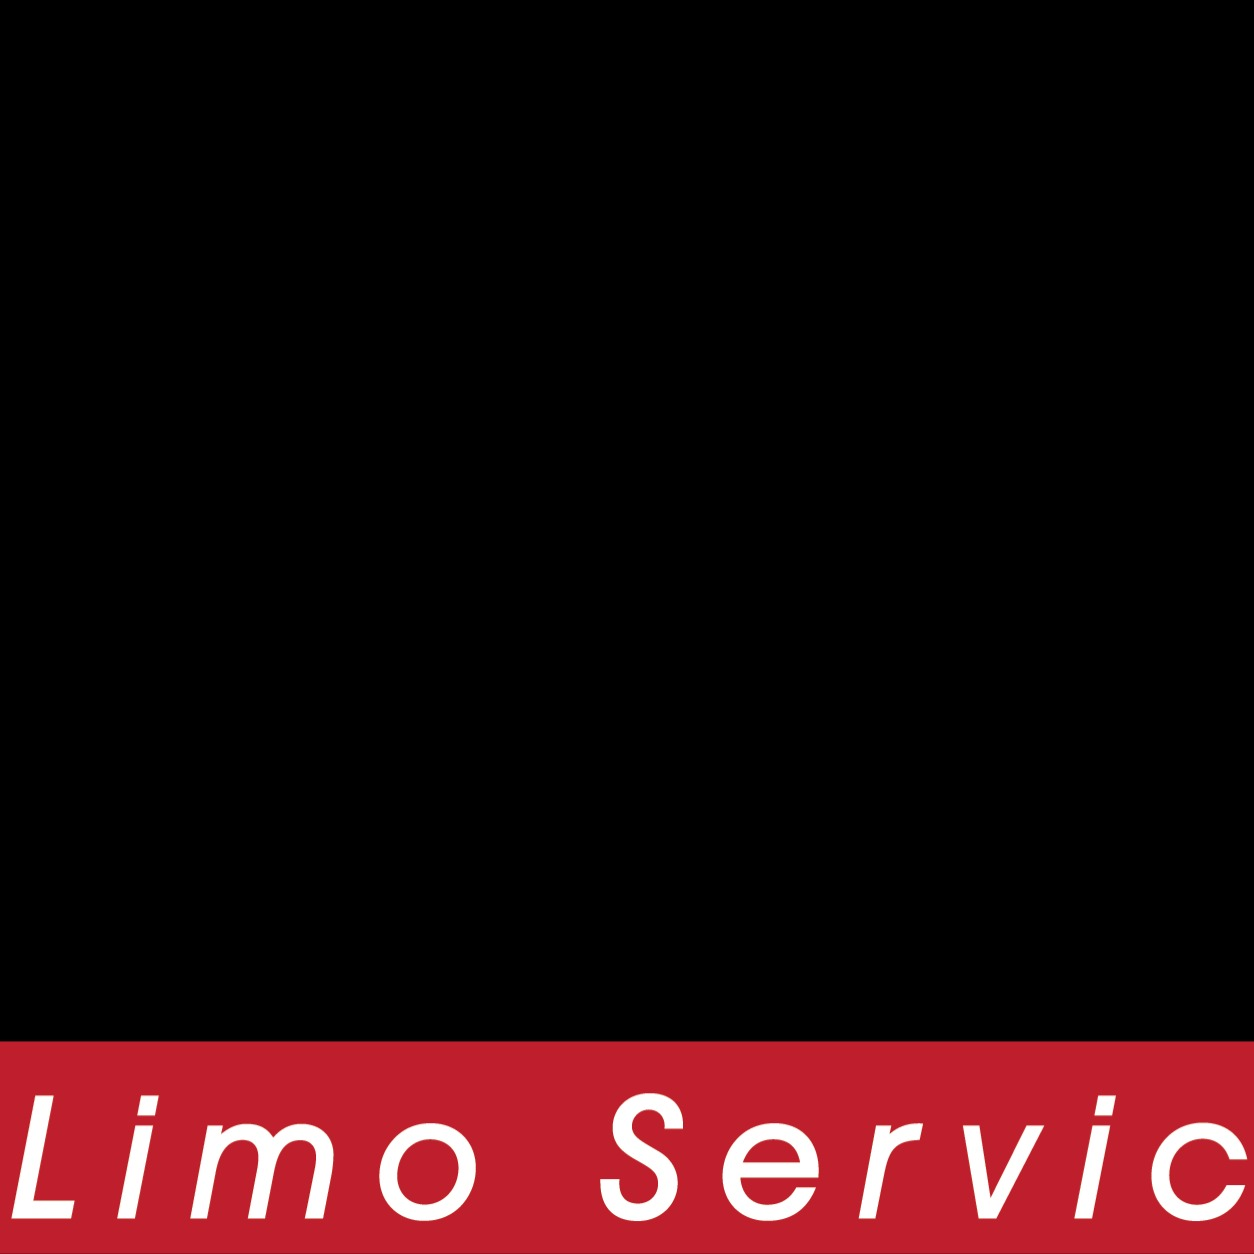 American Transportation & Limo services - Miami, FL 33122 - (305)885-5002 | ShowMeLocal.com